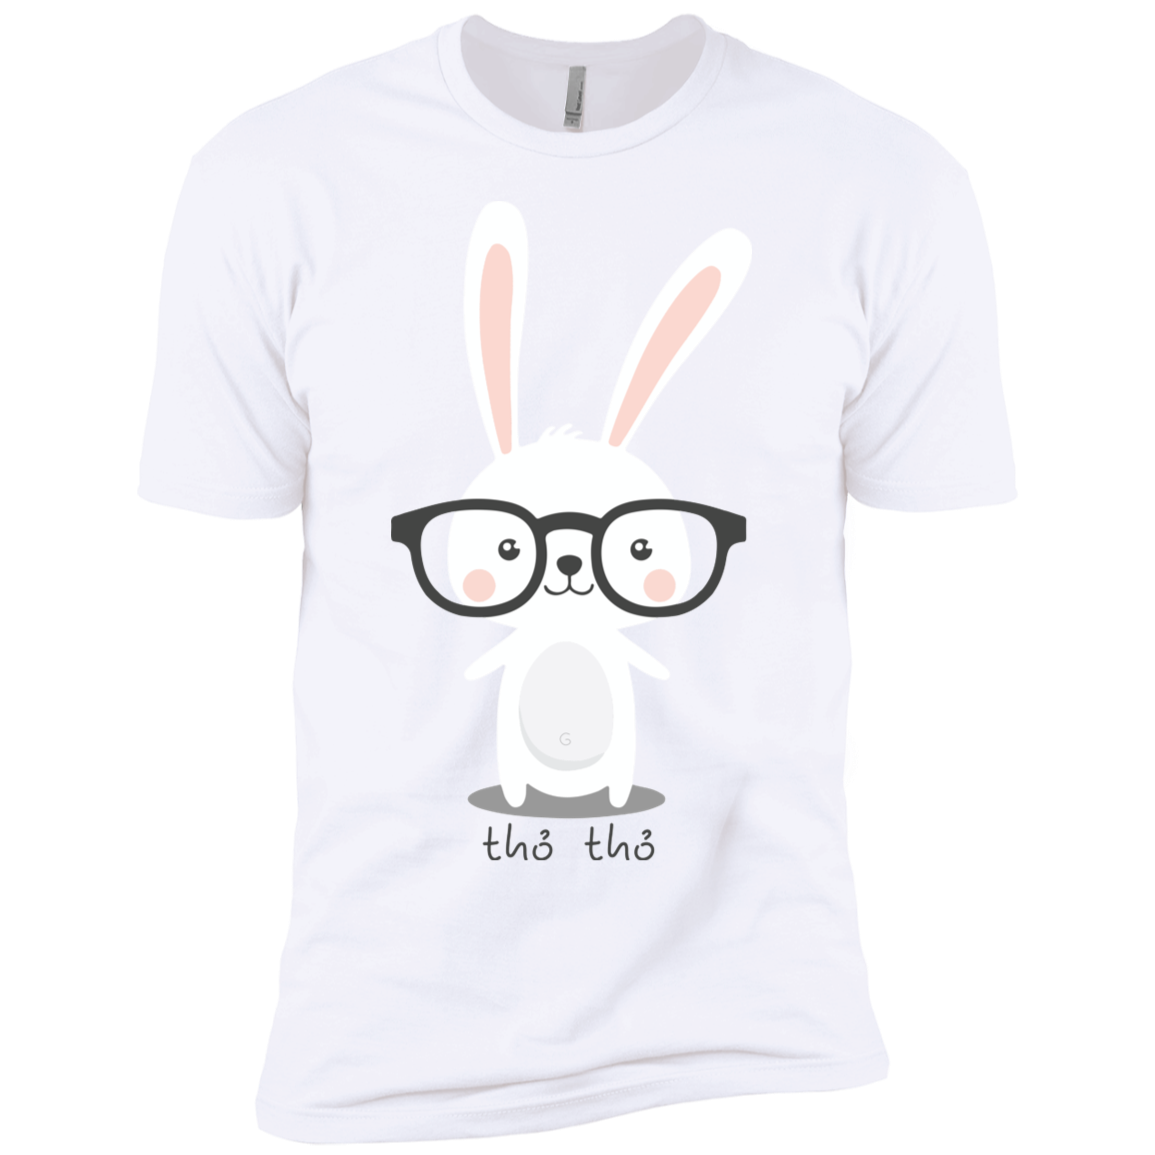 Kids: Bunny Rabbit Con Thỏ – ANH OI